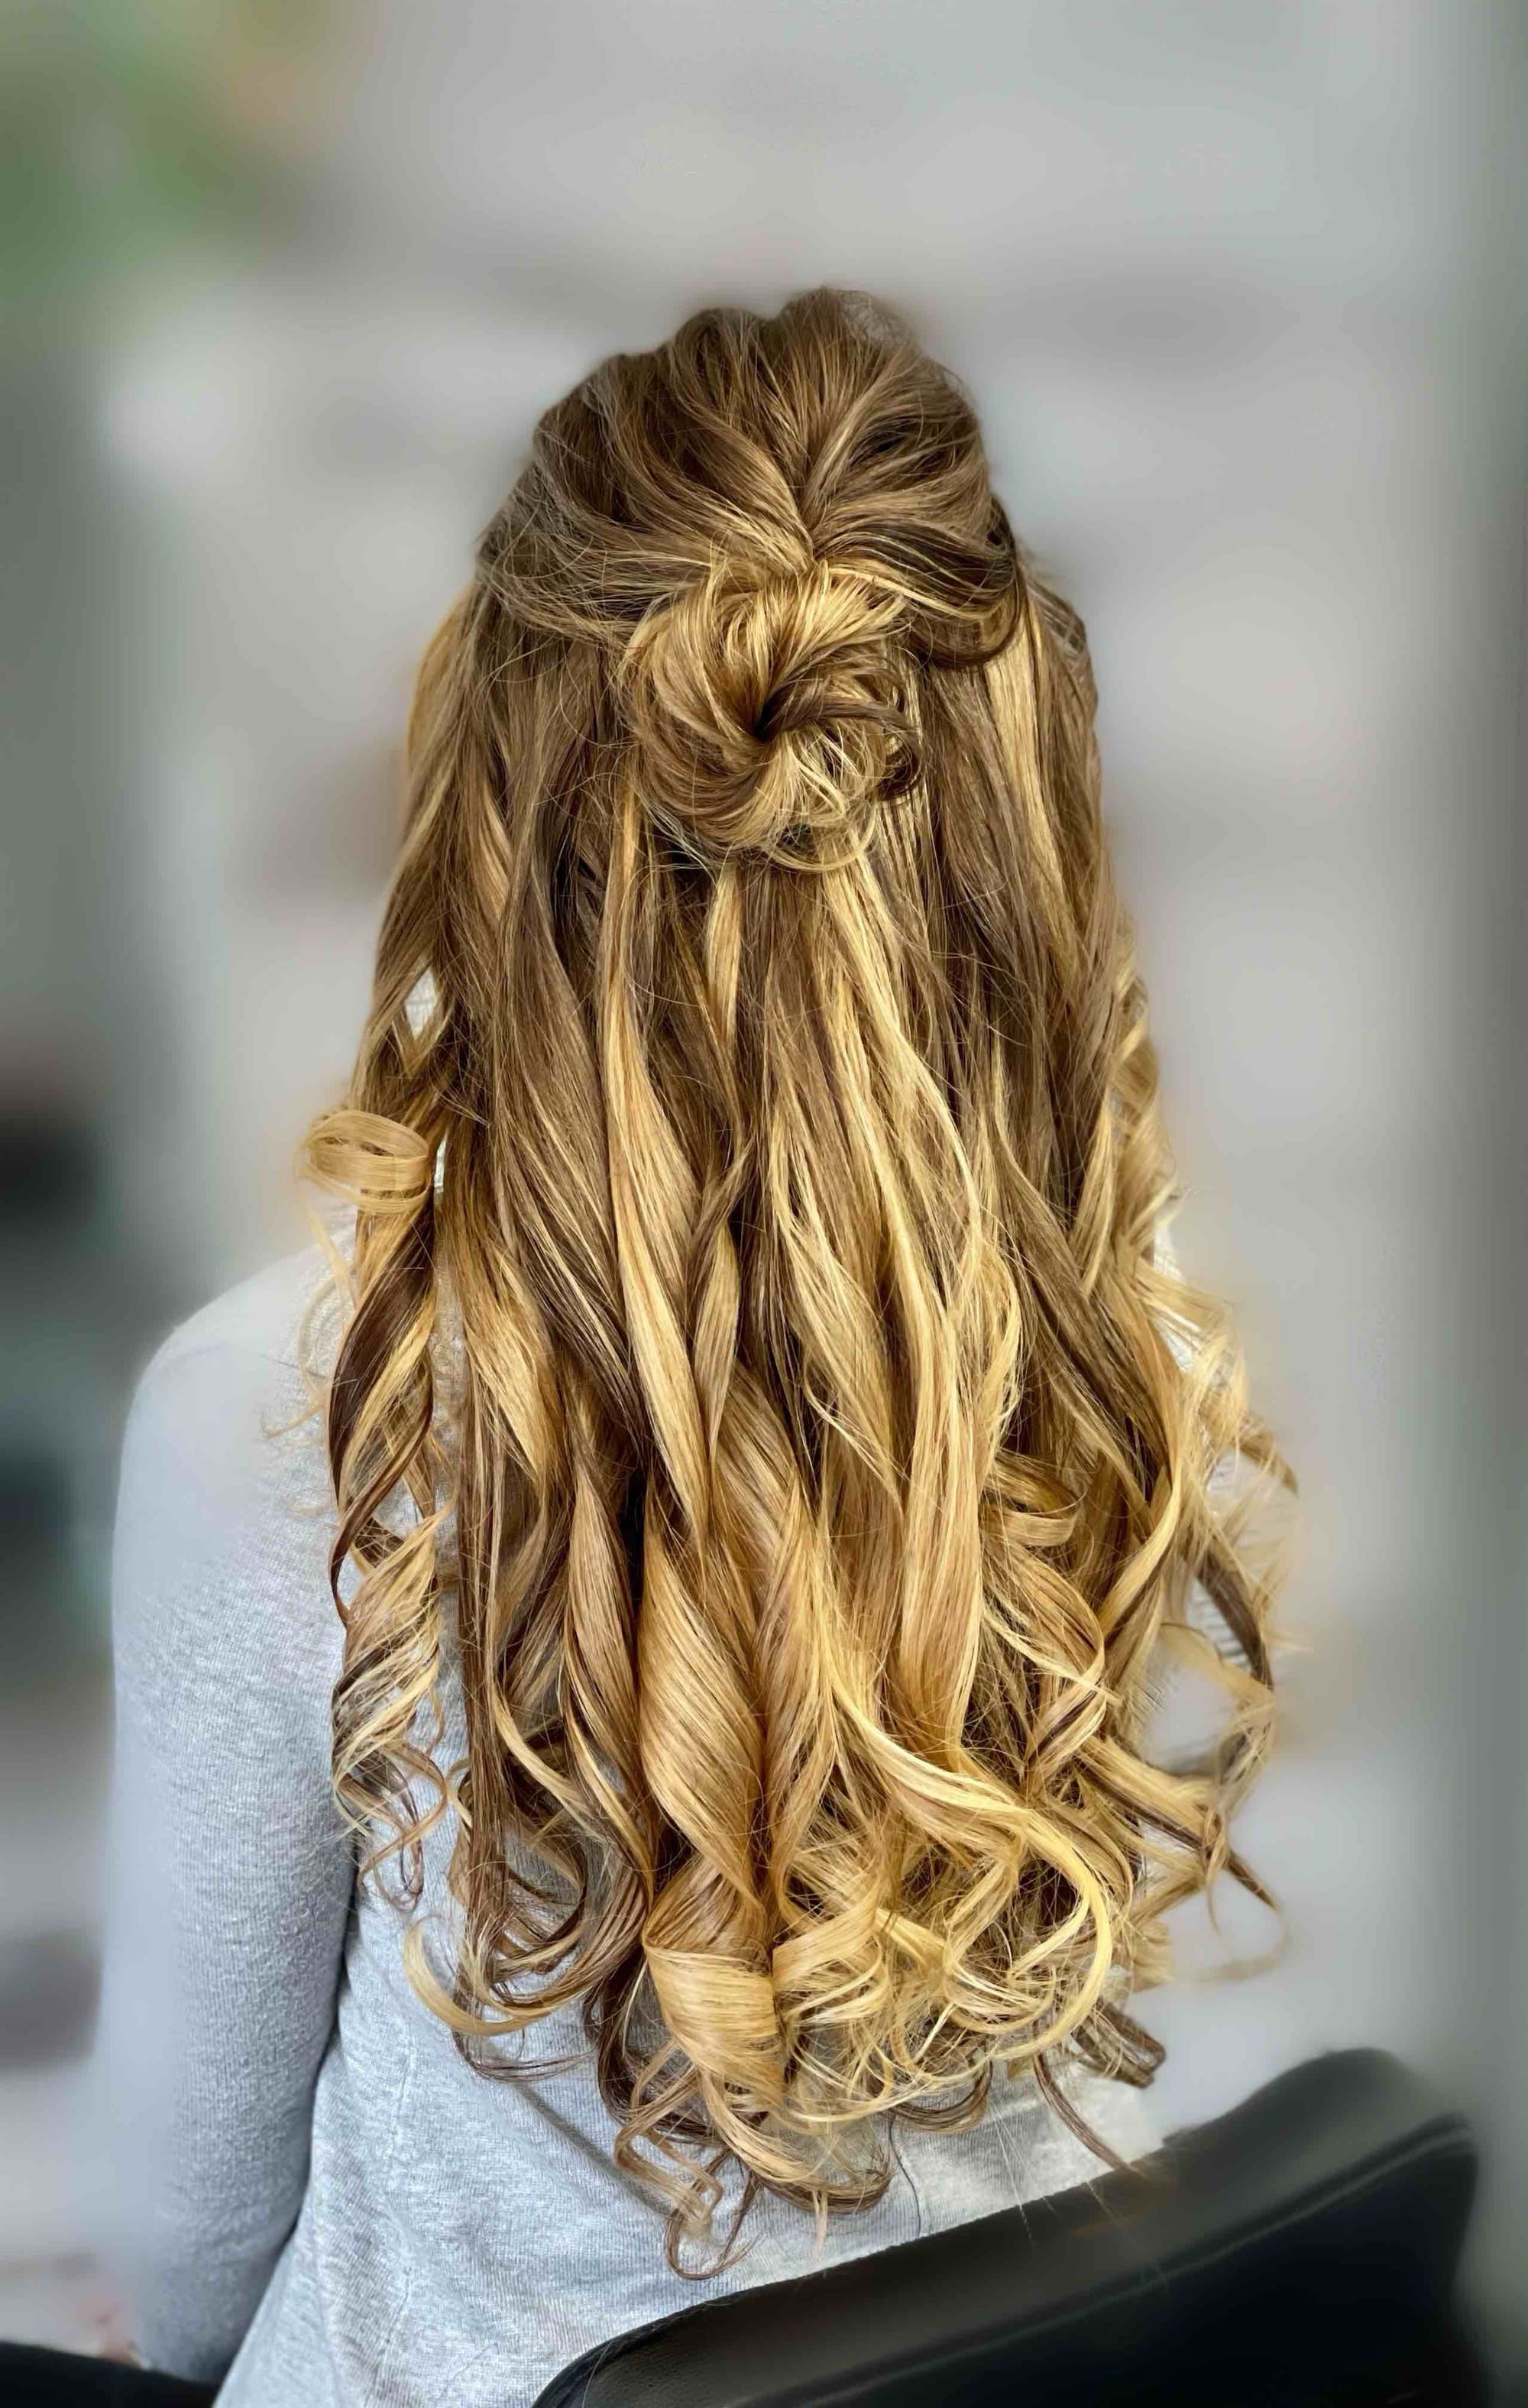 Boho Bride - Half Updo with Hair Swirl